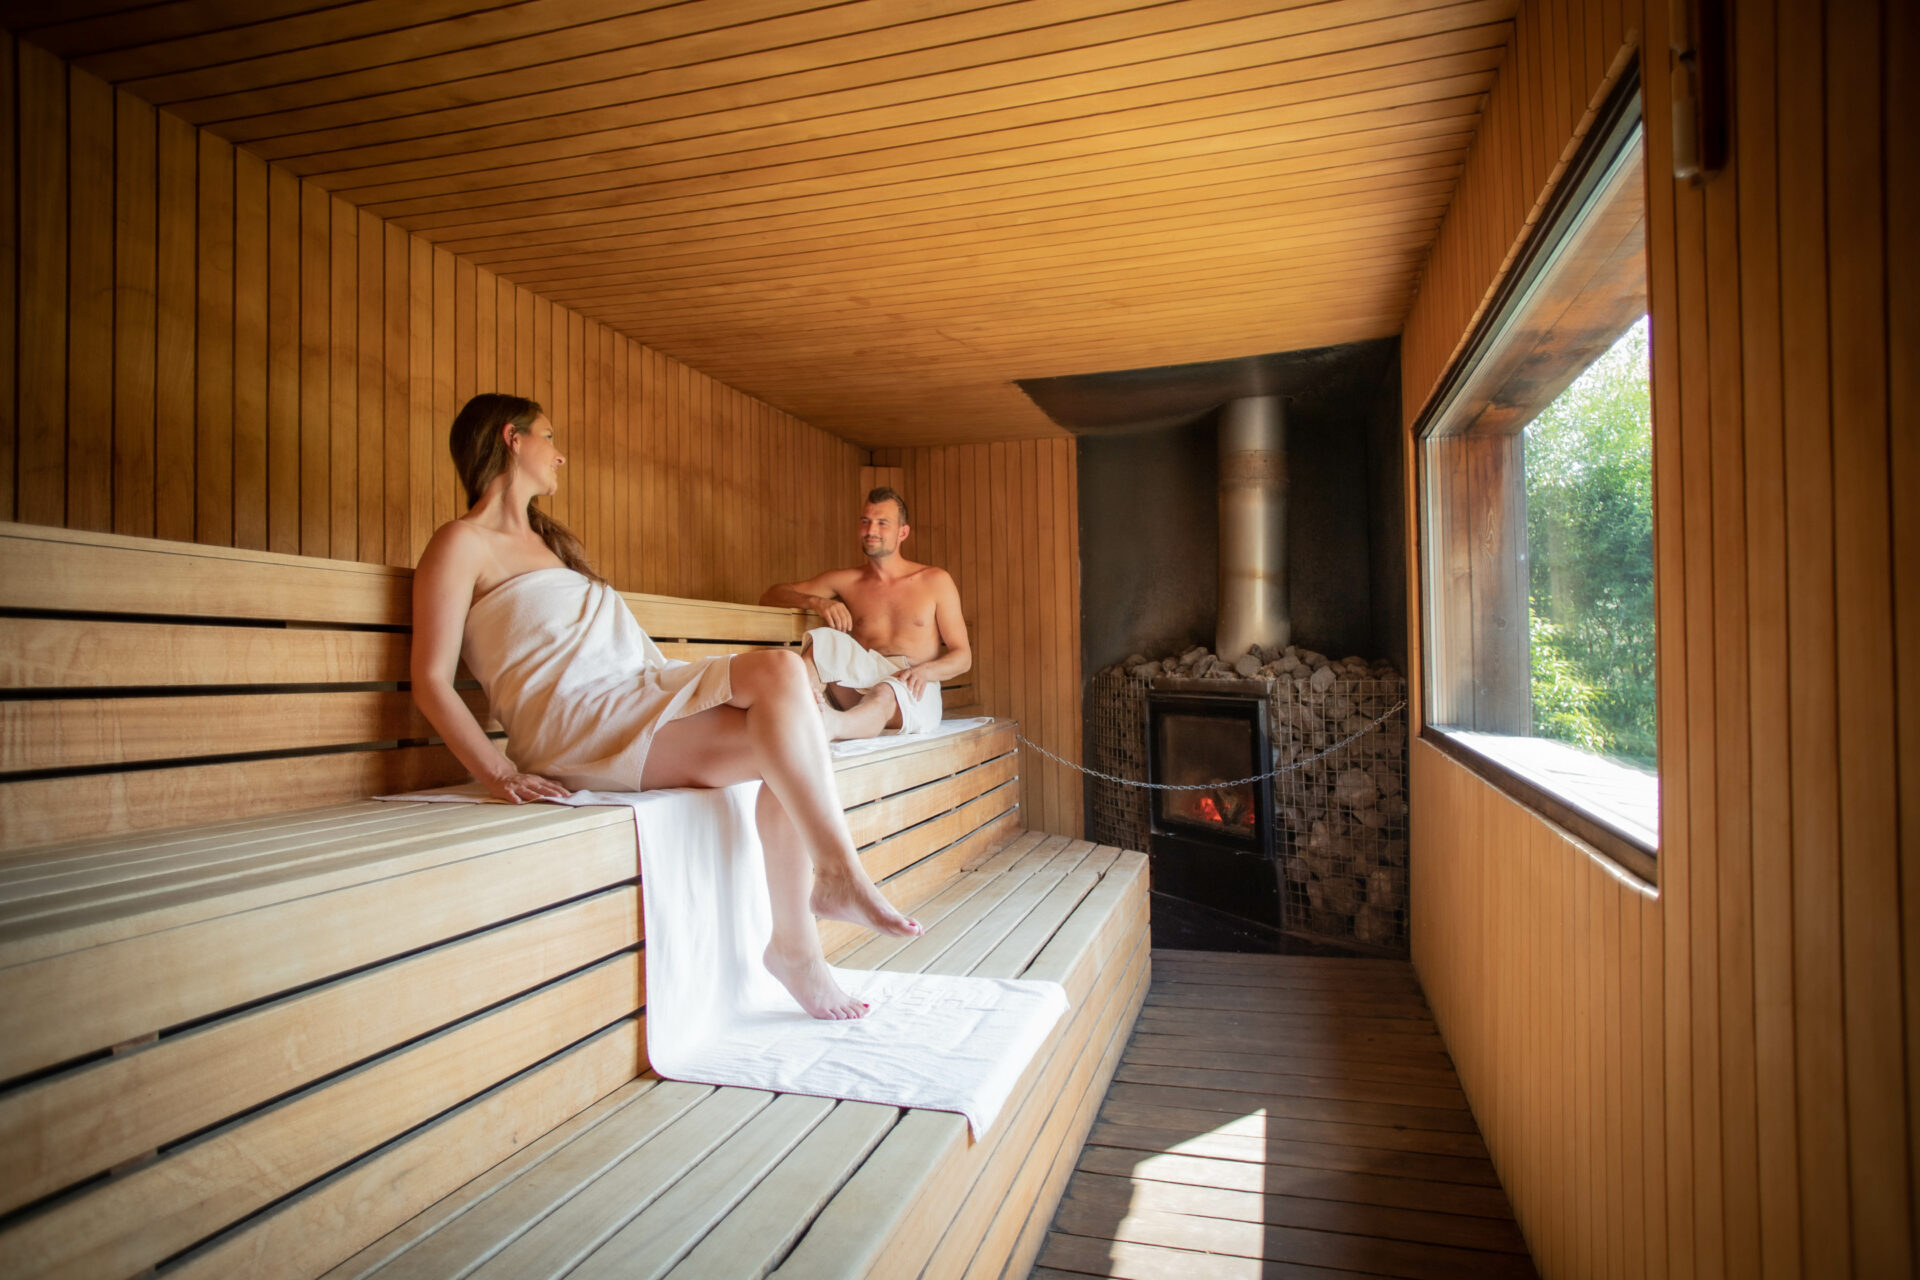 Winter: our favourite sauna season